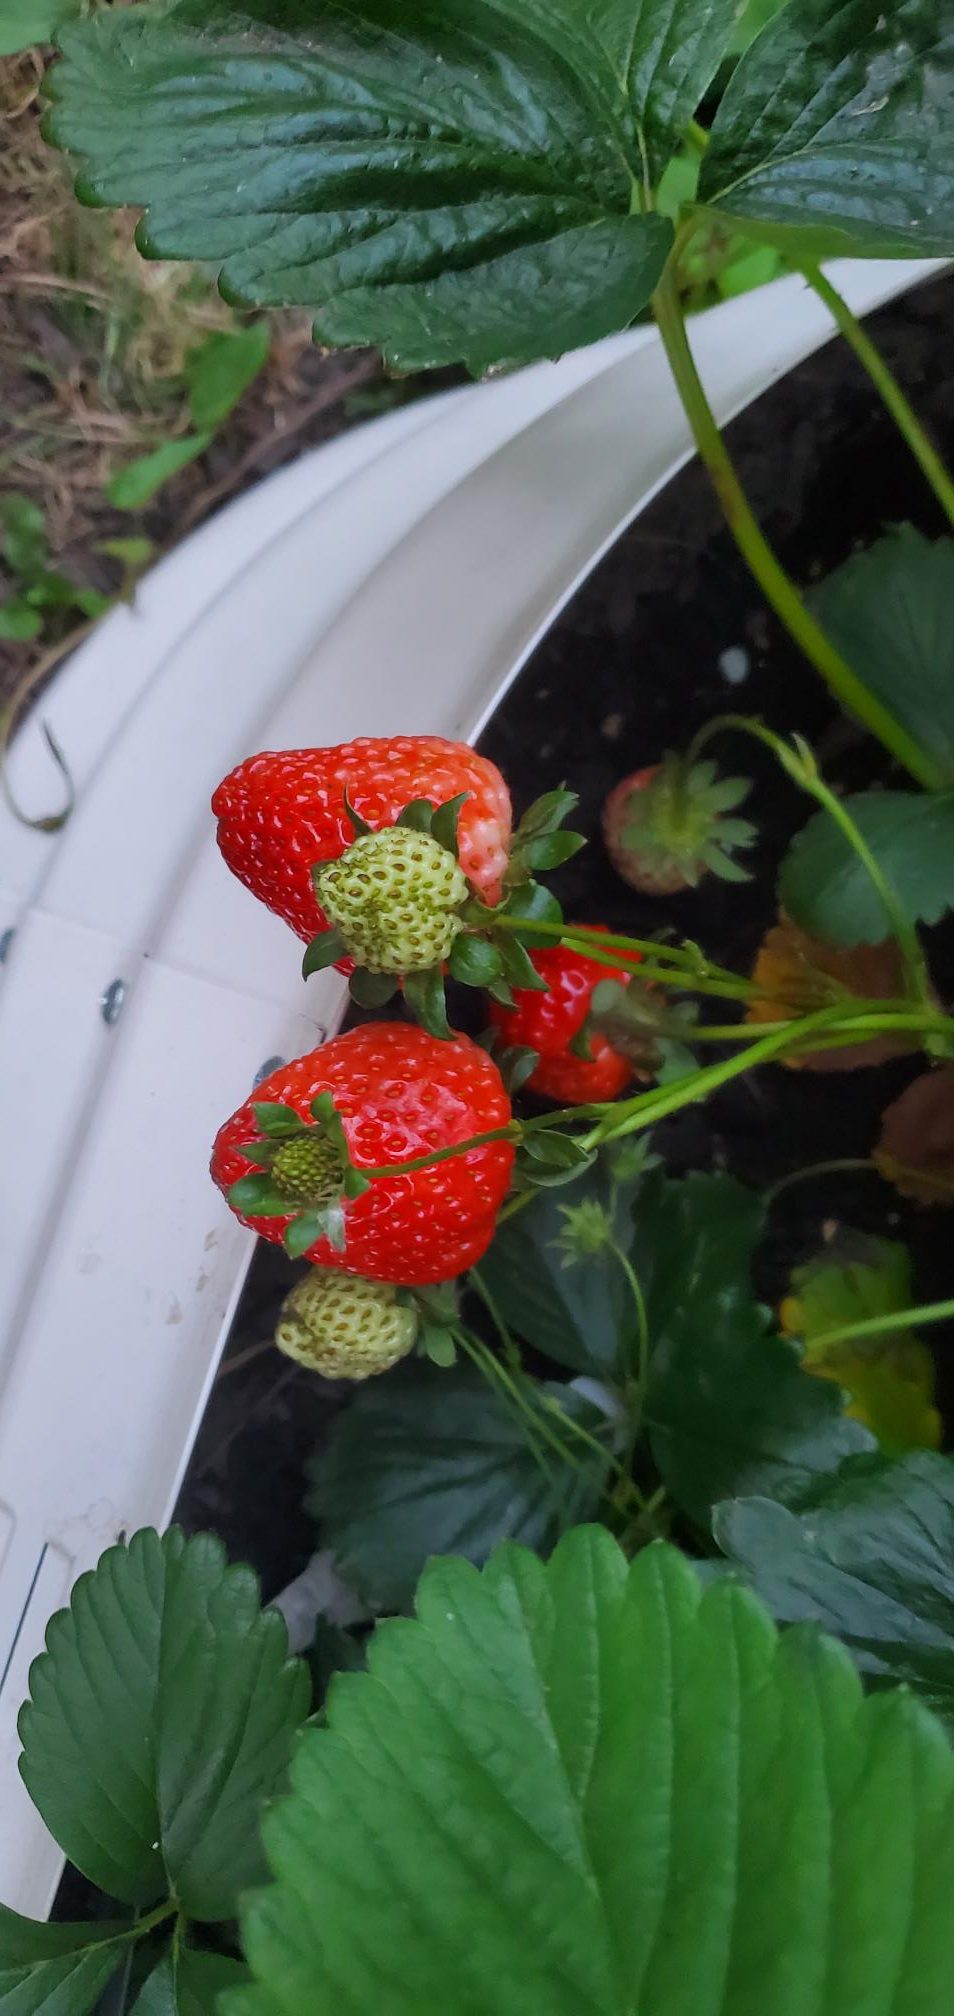 Strawberries growing in our backyard homestead.